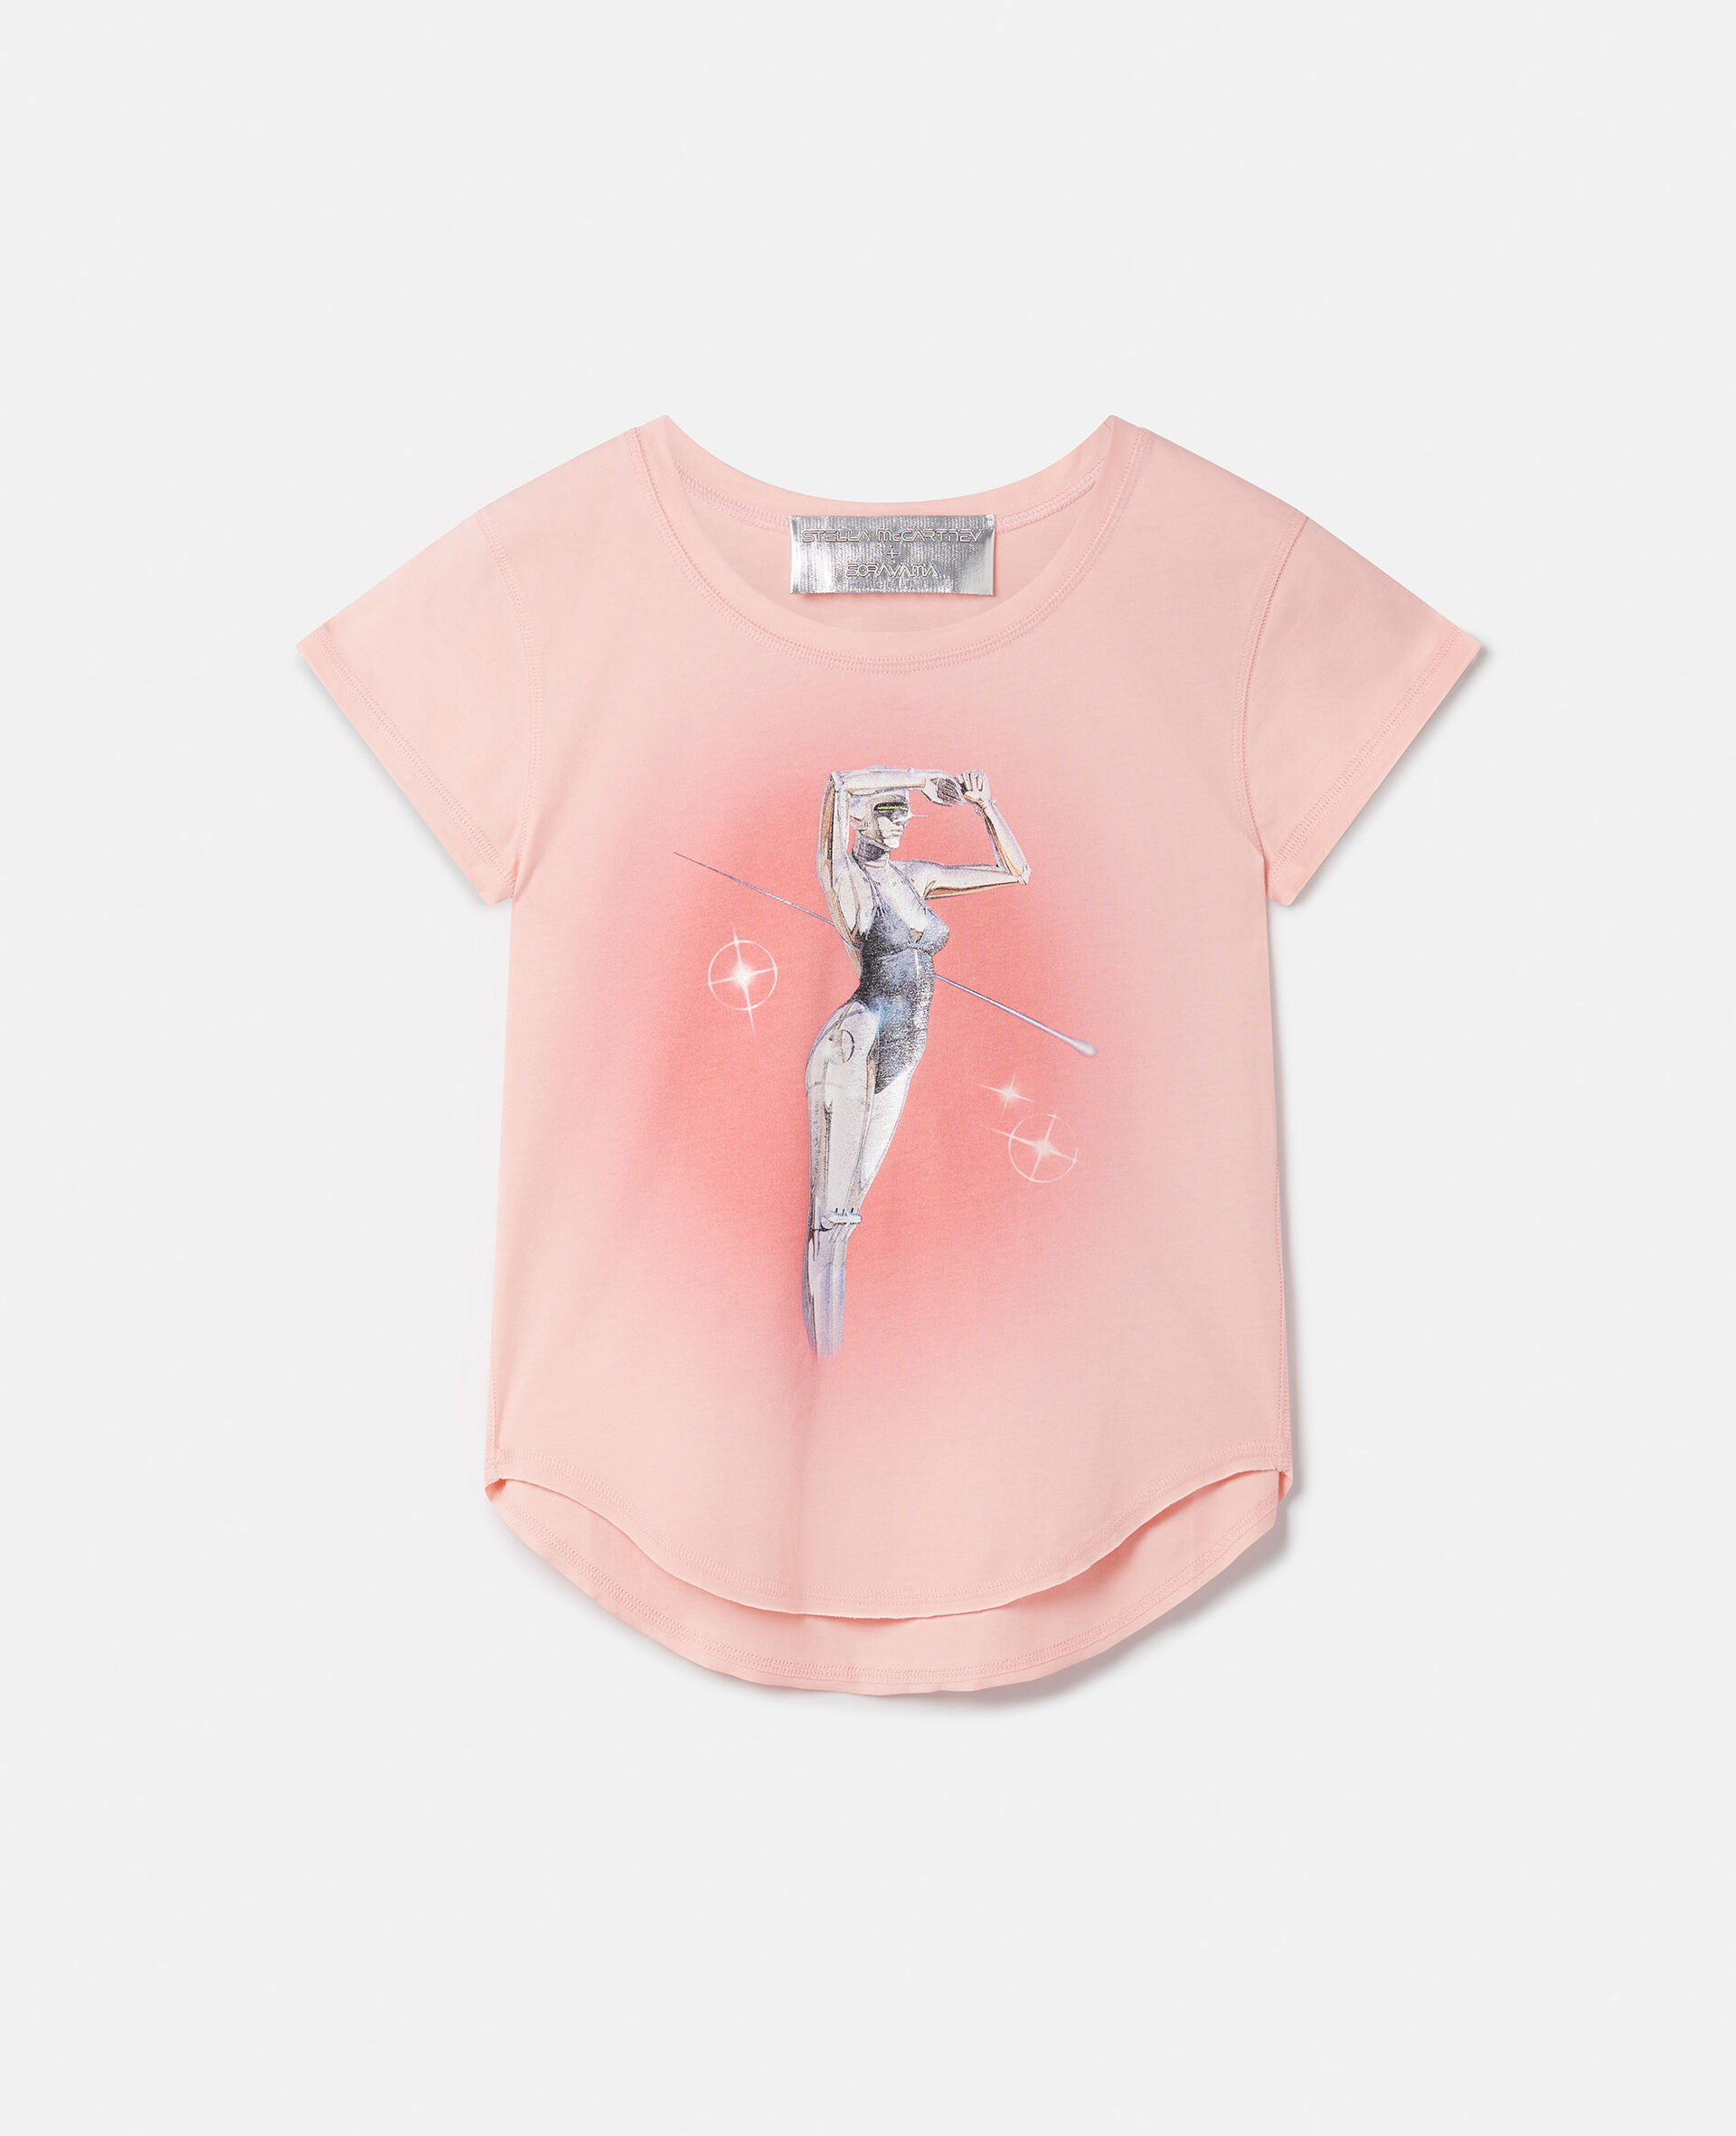 T-shirt Baby in cotone biologico con stampa Sexy Robot-Rosa-medium